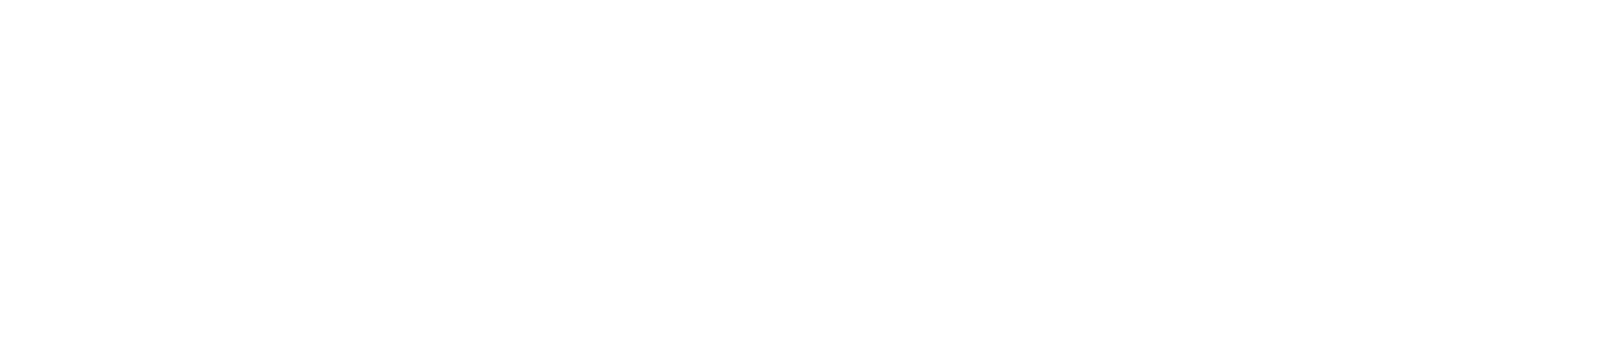 Dr. Reddy's Logo groß für dunkle Hintergründe (transparentes PNG)